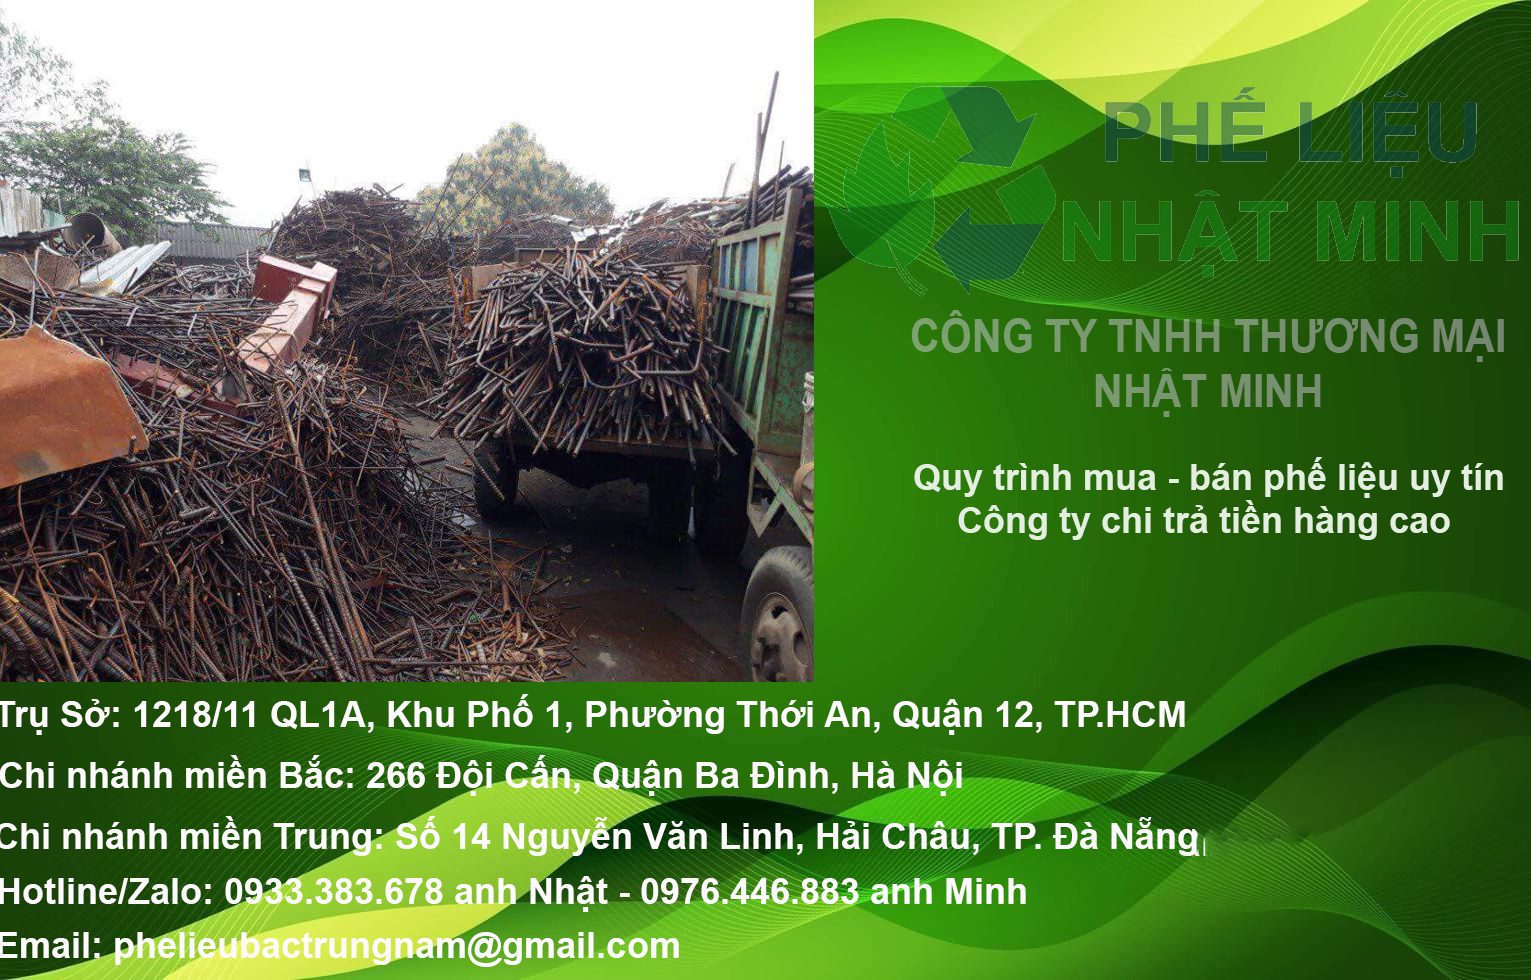 Thu Mua Phe Lieu Nhat Minh Company Gia Cao